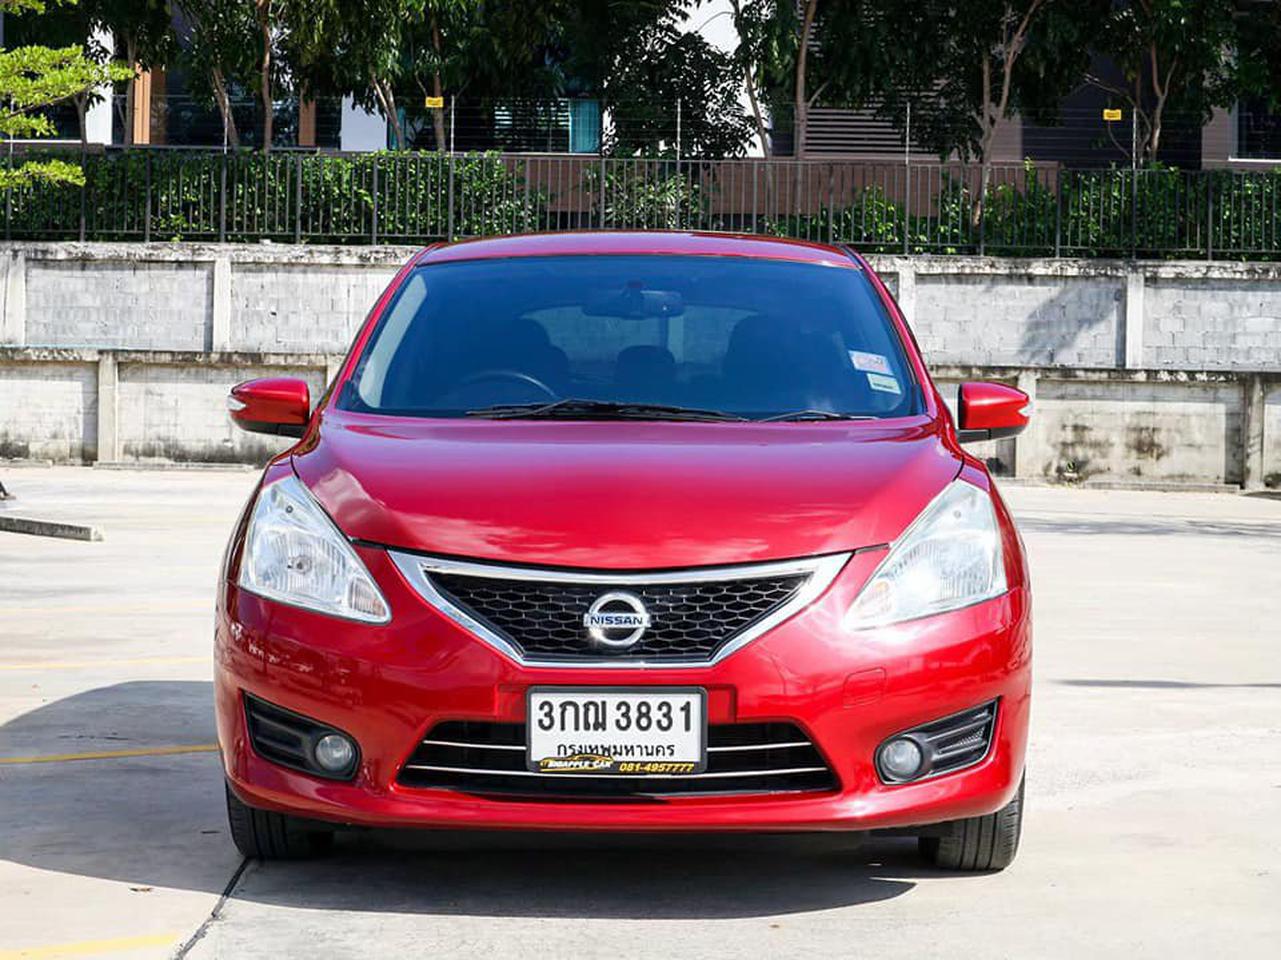 Nissan Pulsar 1.6 Smart Edition ปี 2014 สีแดง รูปเล็กที่ 1